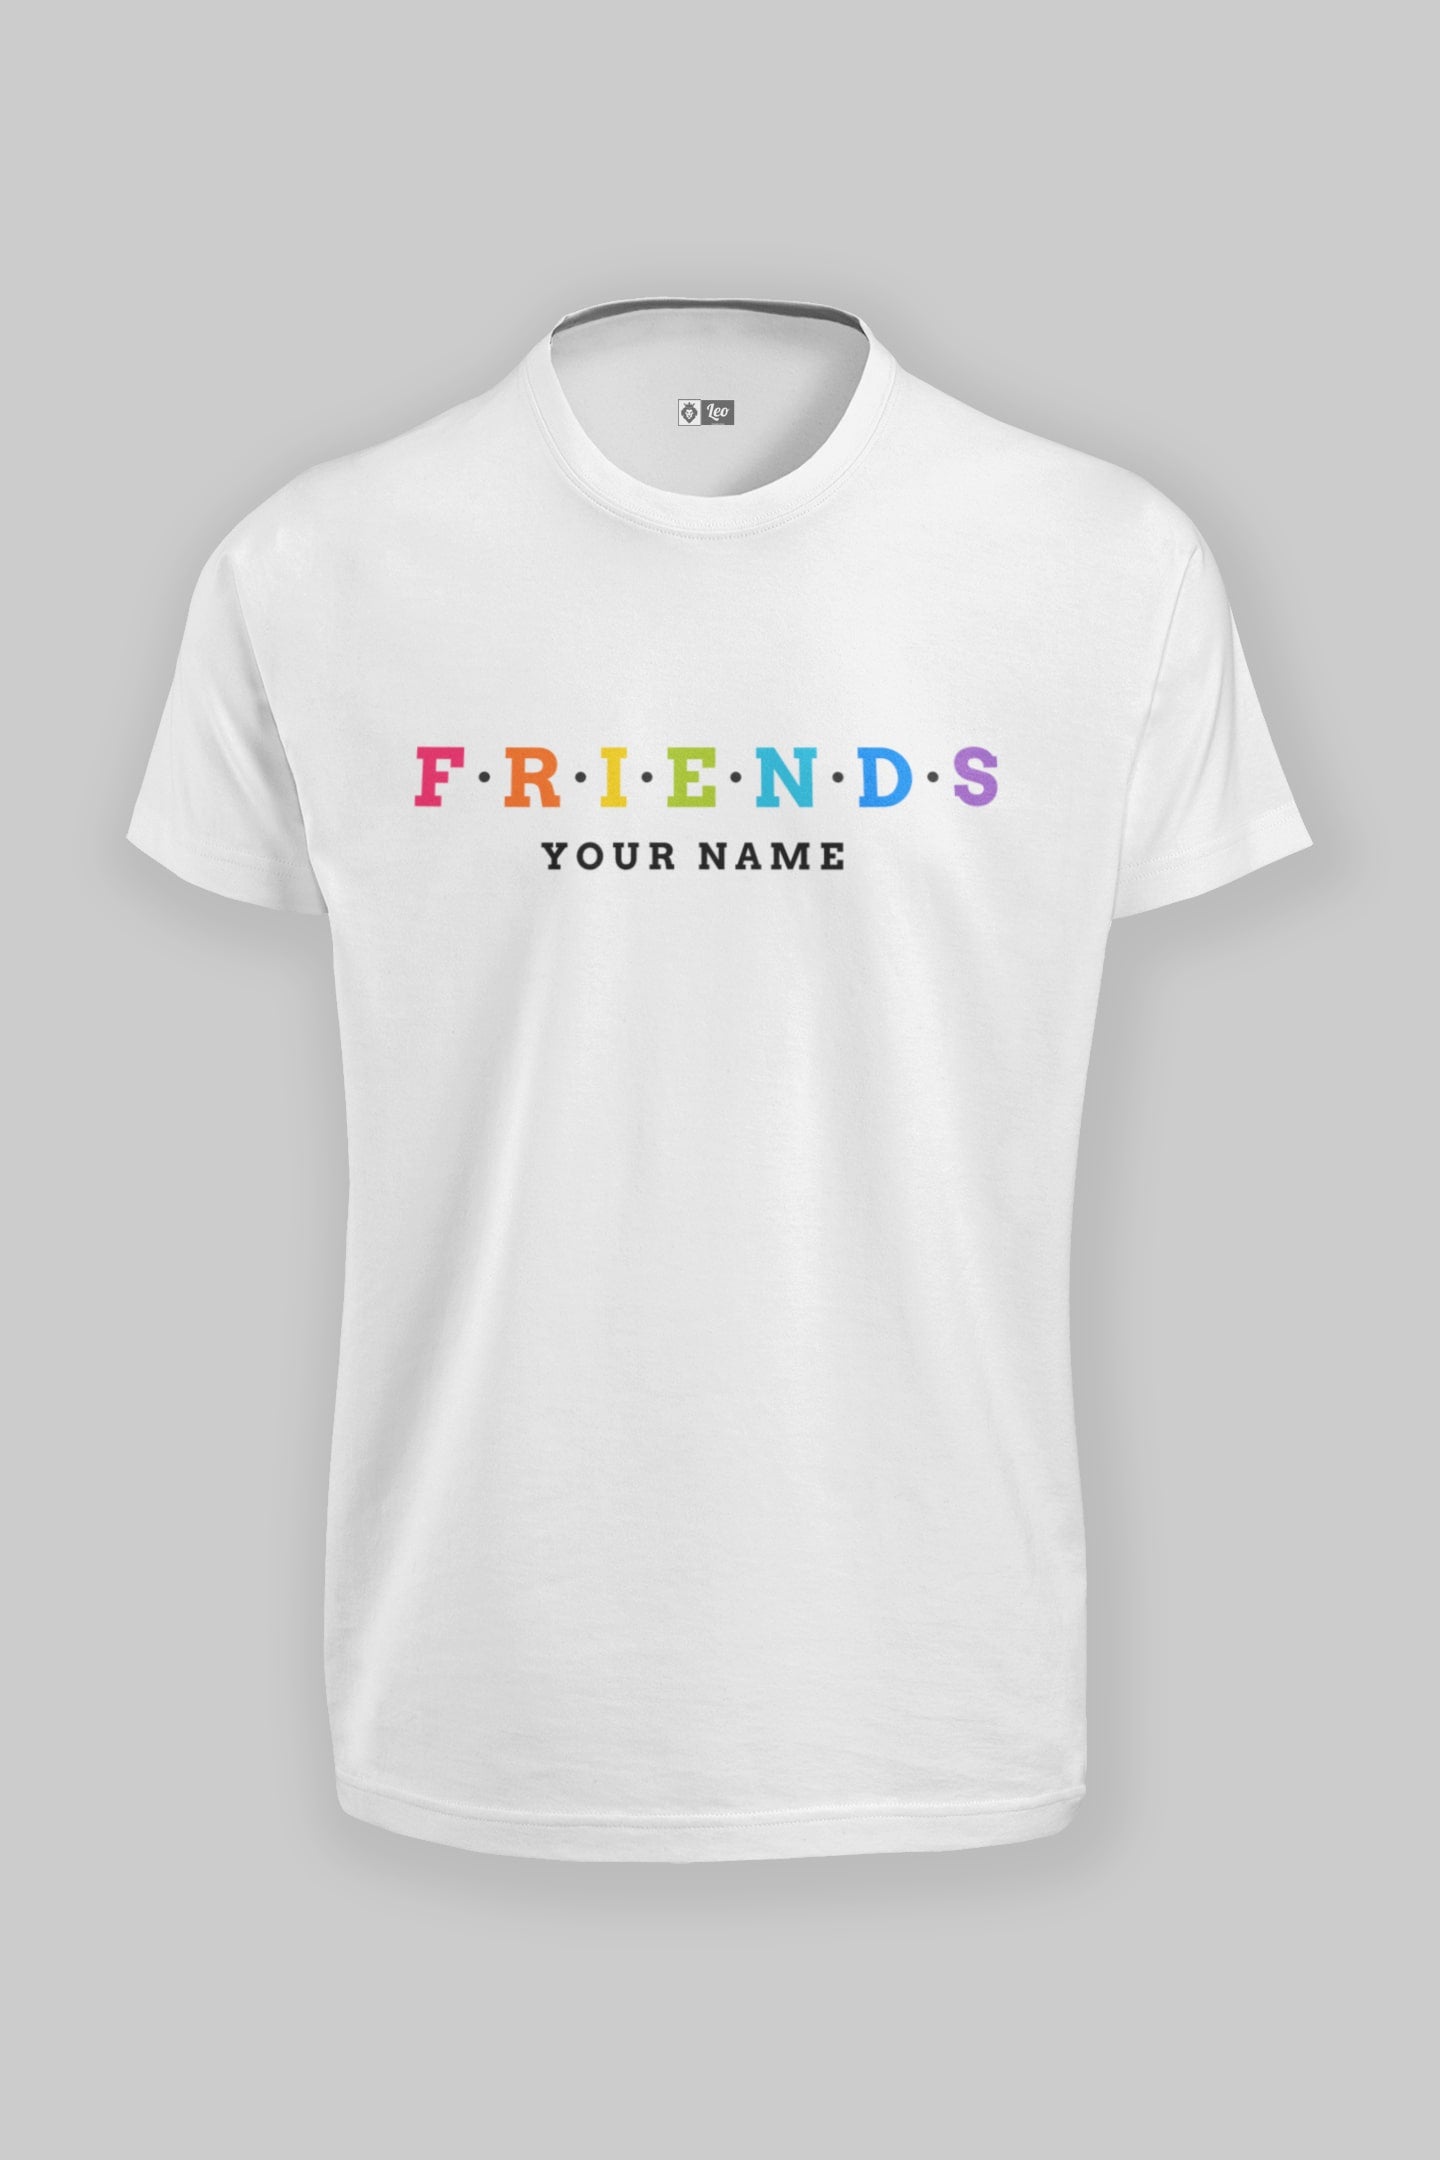 Create Your Own Friendship T-Shirt 